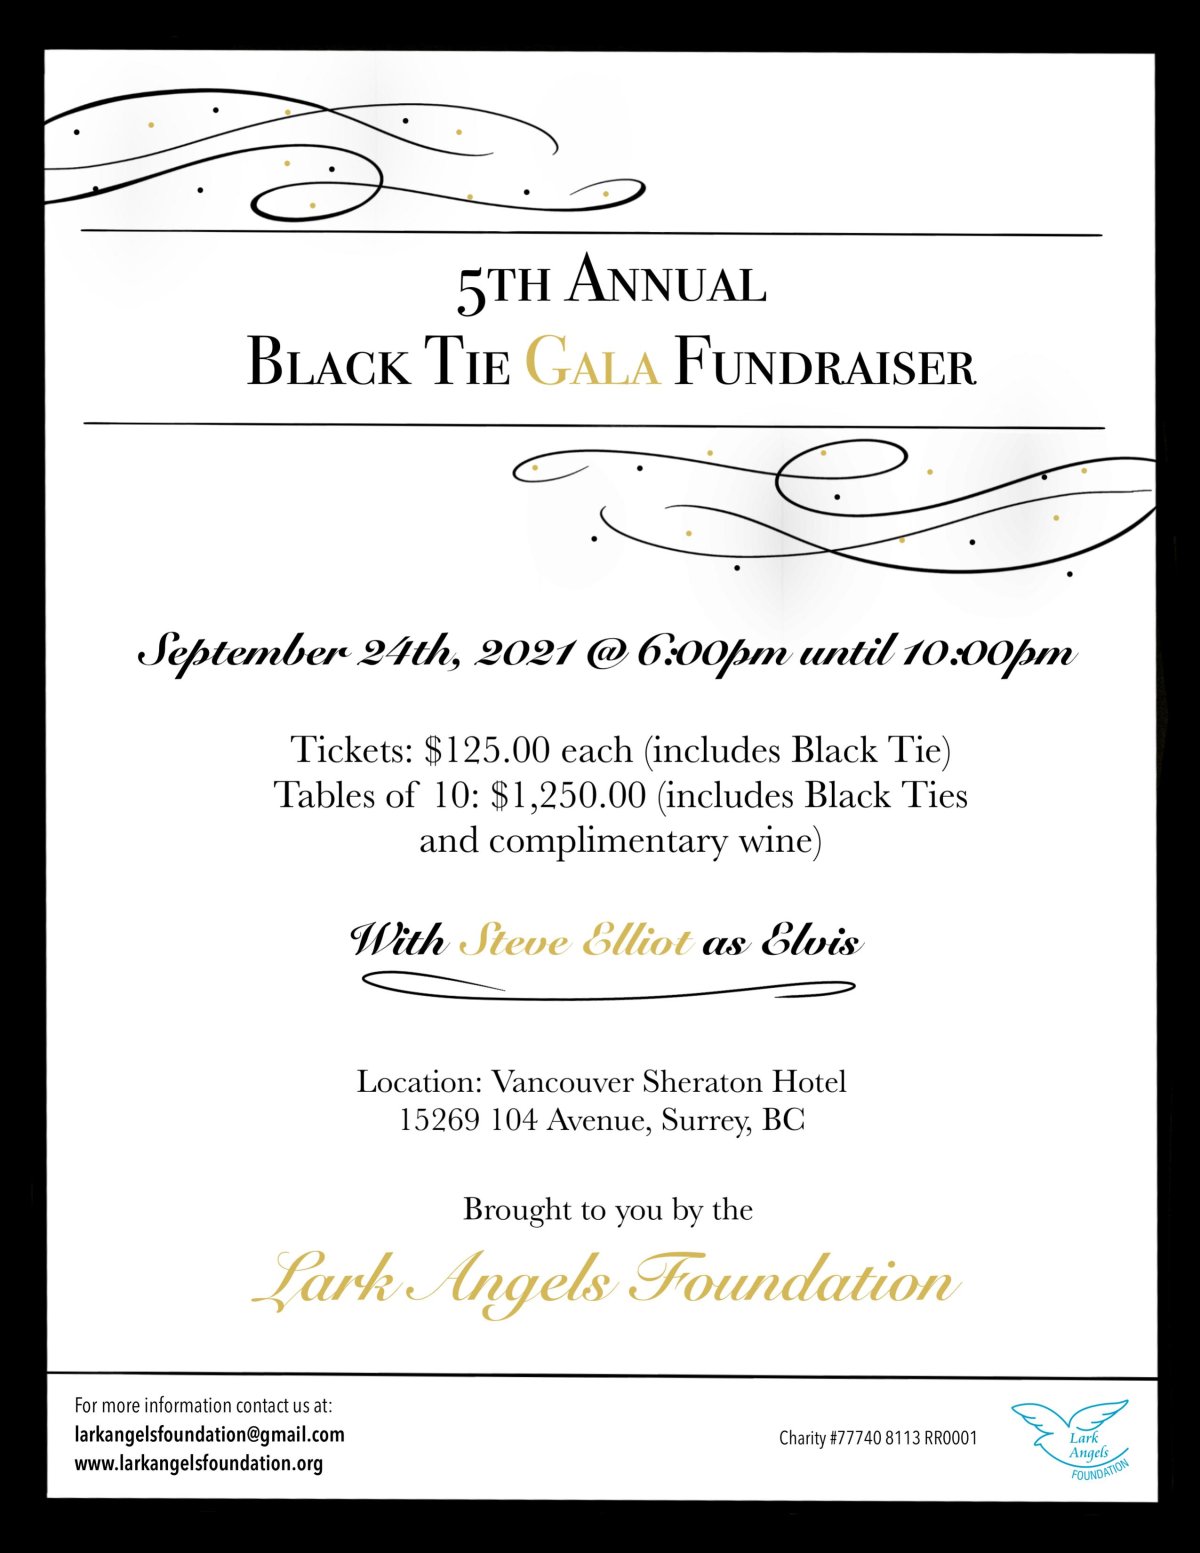 Lark Angels Foundation Annual Black Tie Gala Fundraiser - image